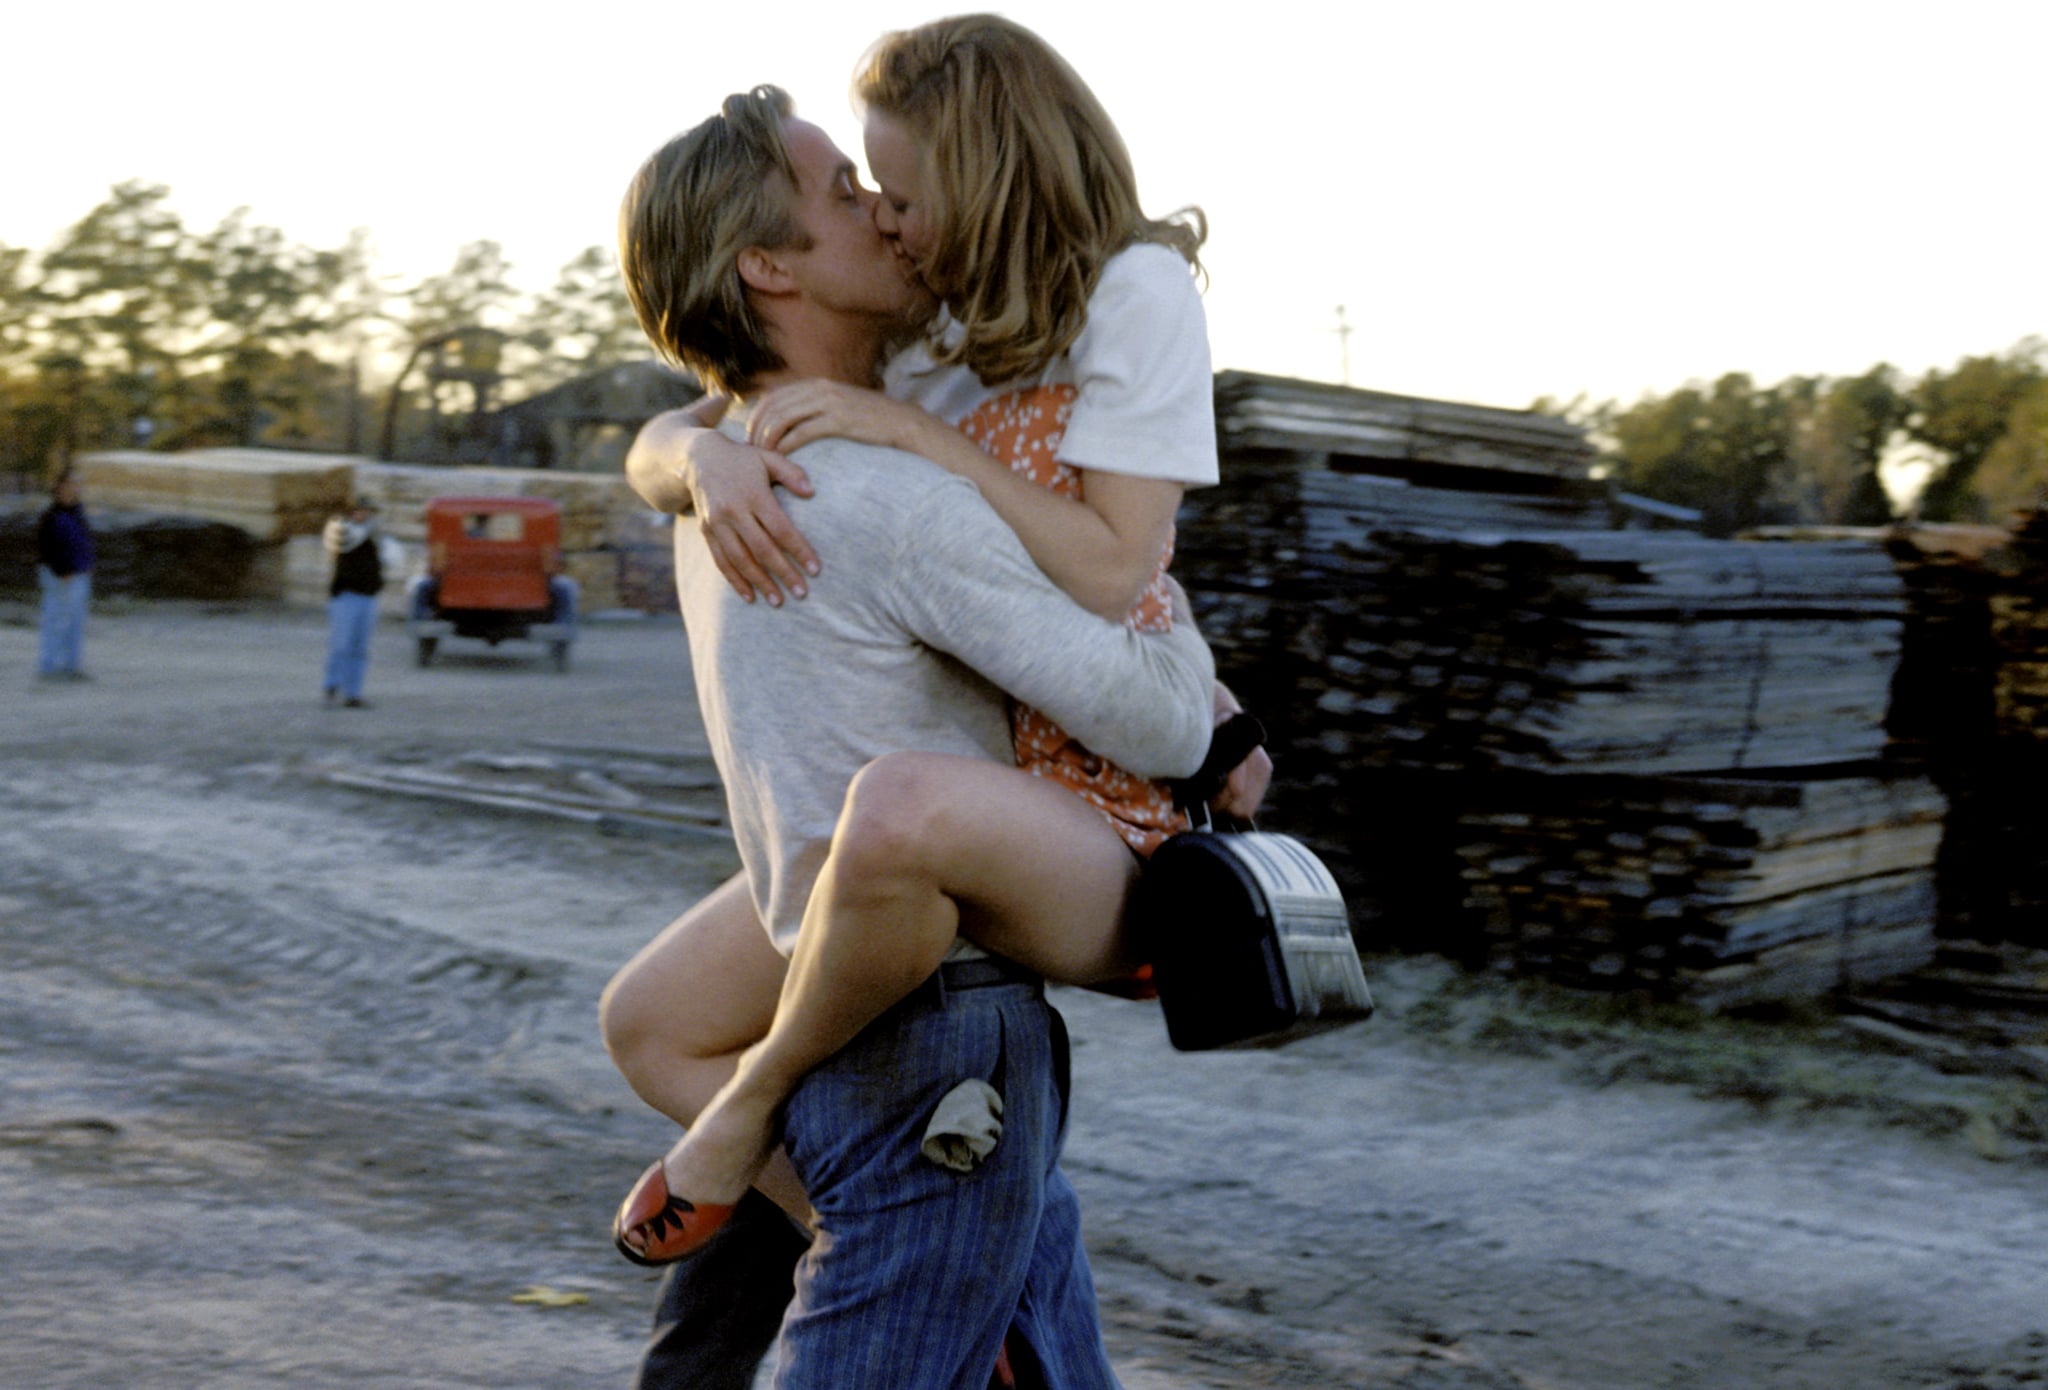 THE NOTEBOOK, Ryan Gosling, Rachel McAdams, 2004, (c) New Line/courtesy Everett Collection